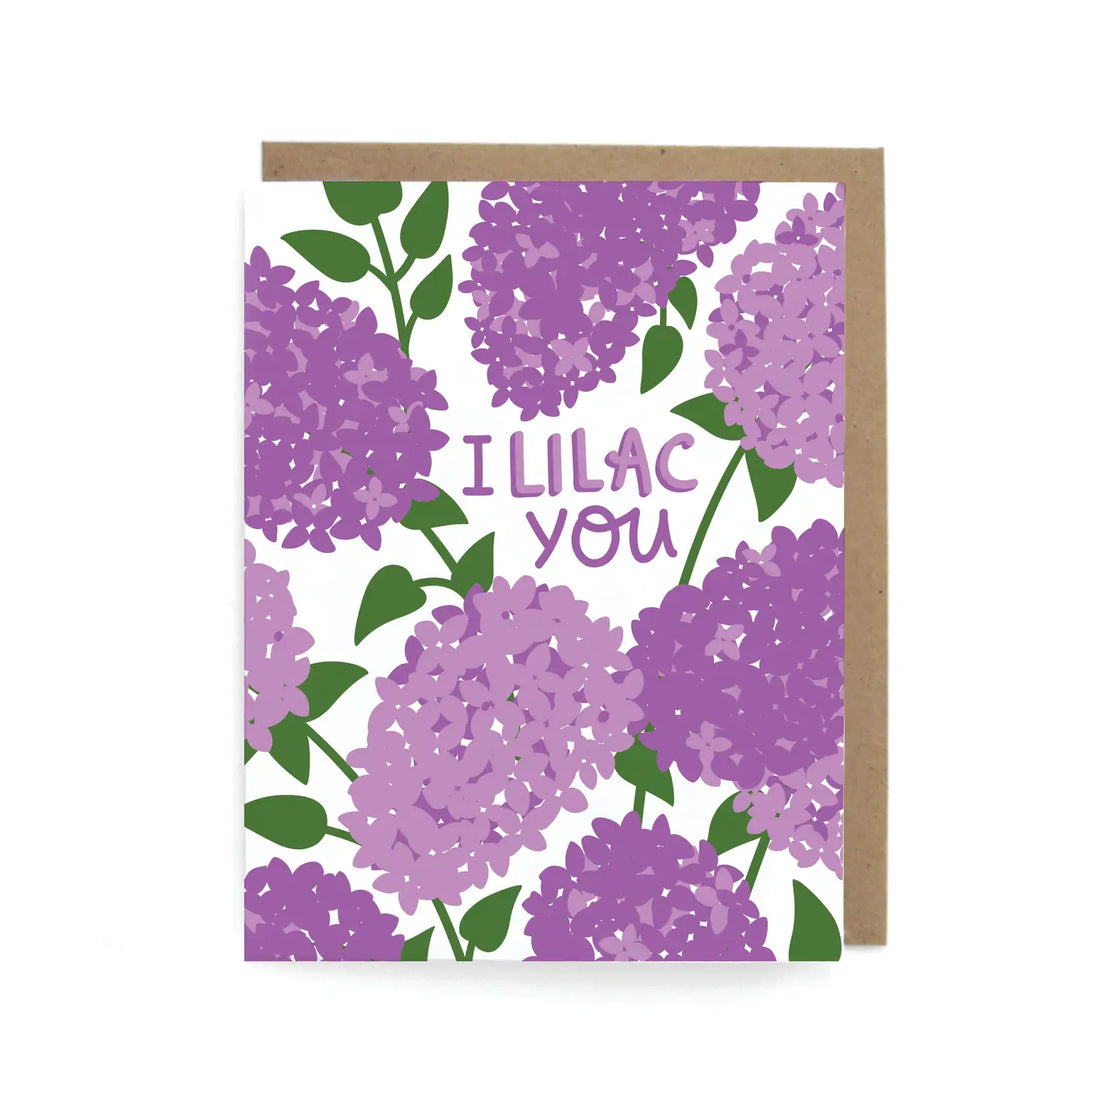 I Lilac You Card